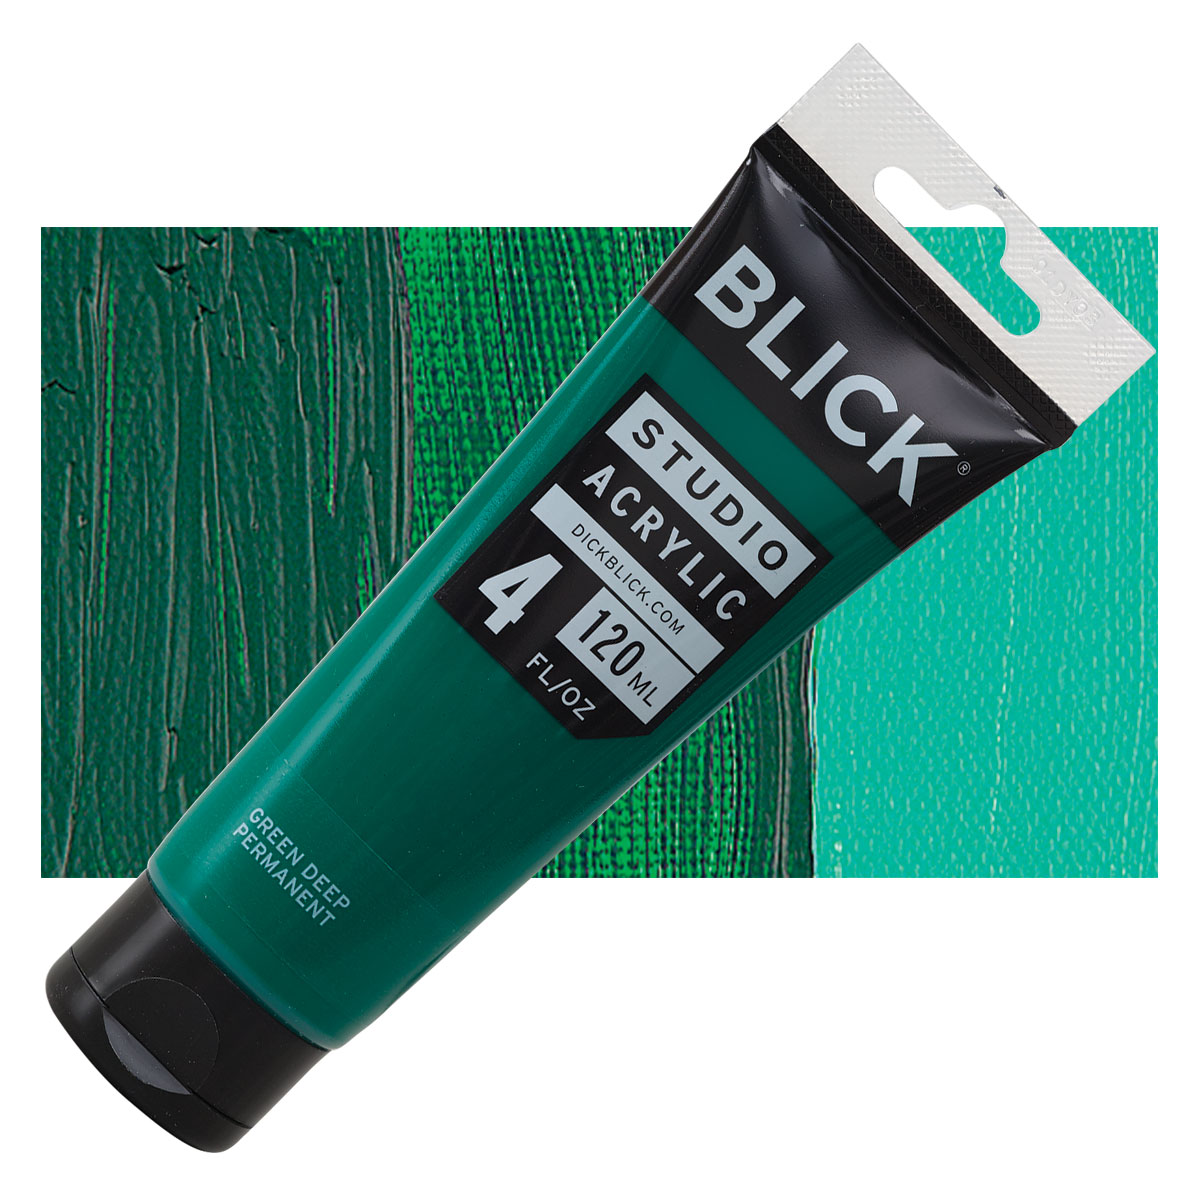 Blick Studio Acrylics Fluorescent Purple, 4 oz Tube